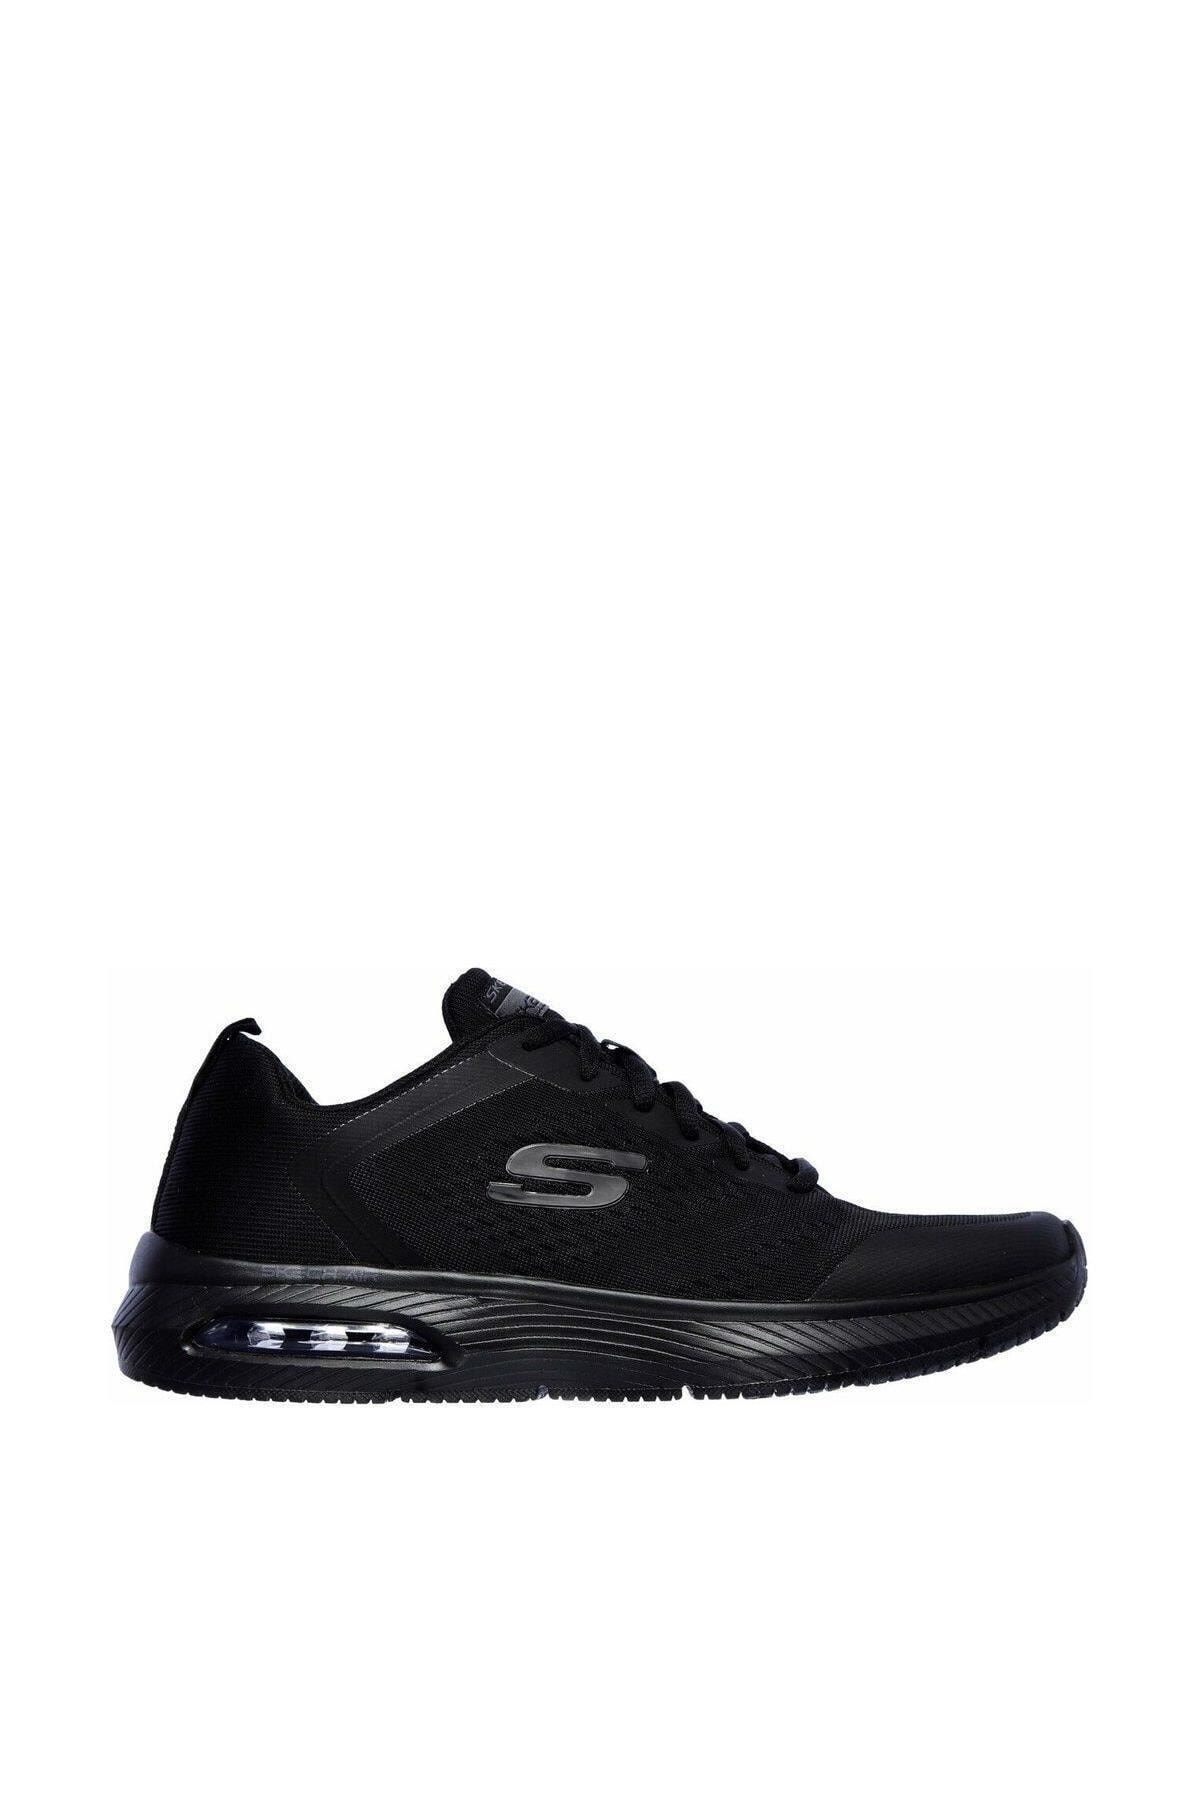 Skechers Dyna - Air - Pelland Erkek Siyah Spor Ayakkabı 52559 Bbk